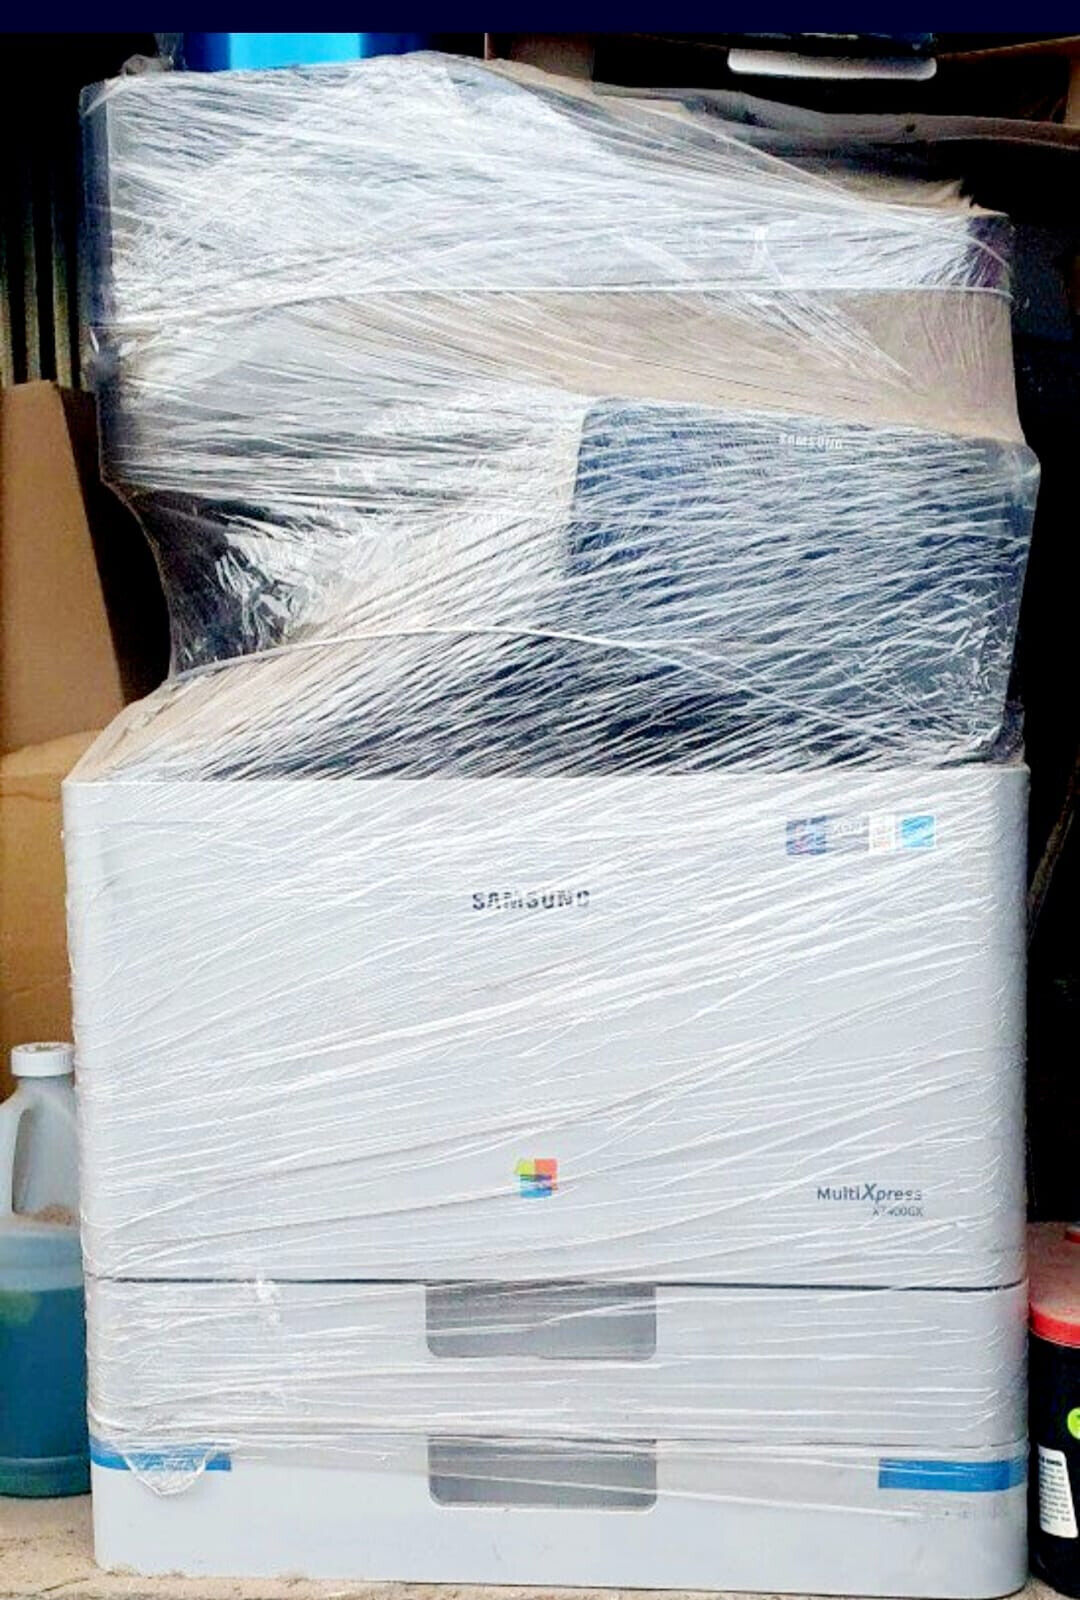 Samsung MultiXpress X7400 GX Color Laser Printer Copier